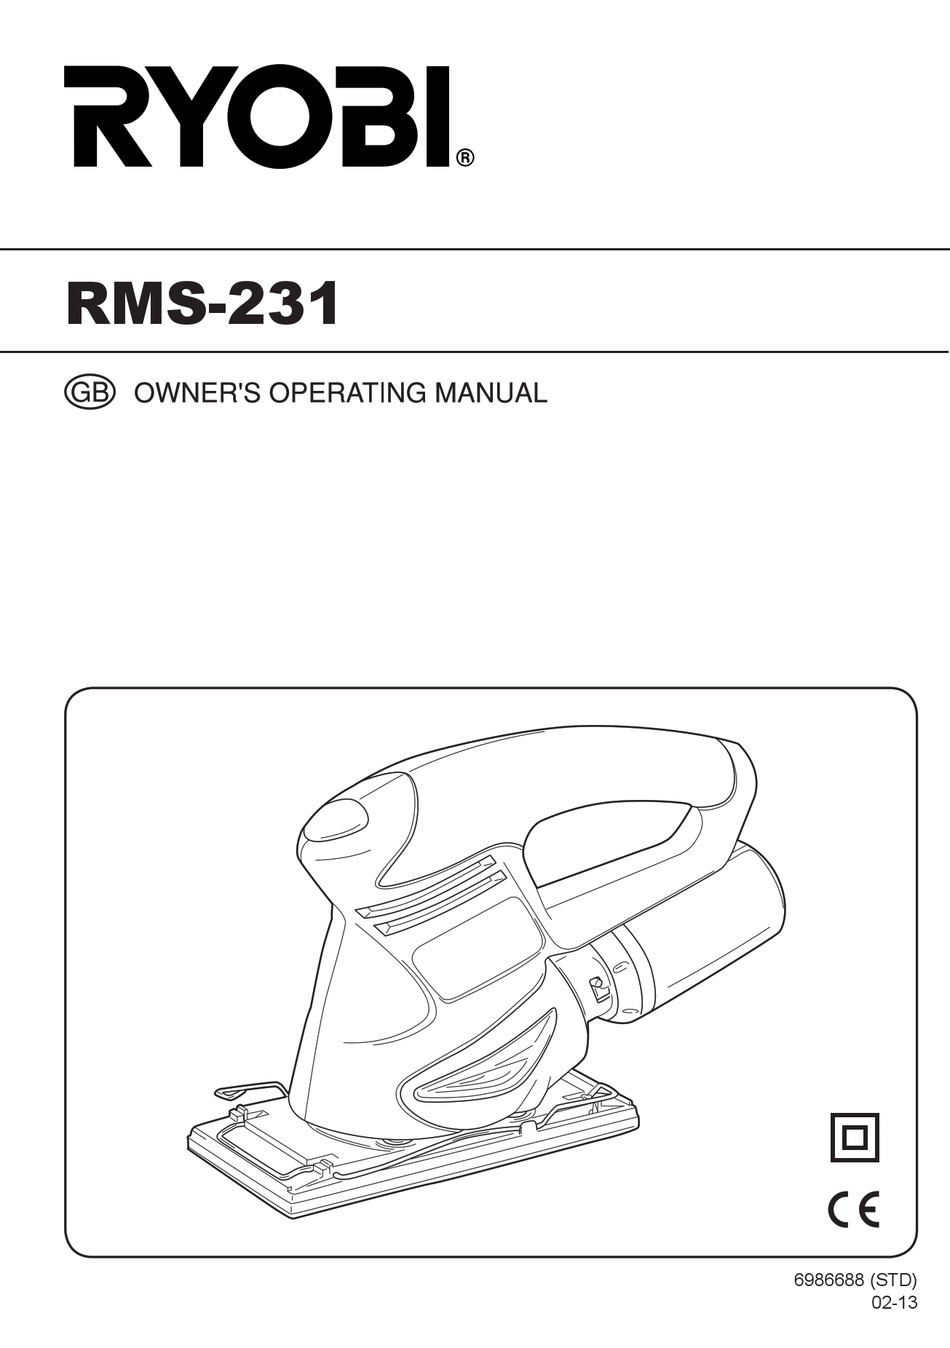 Ryobi Rms 231 Owners Operating Manual Pdf Download Manualslib